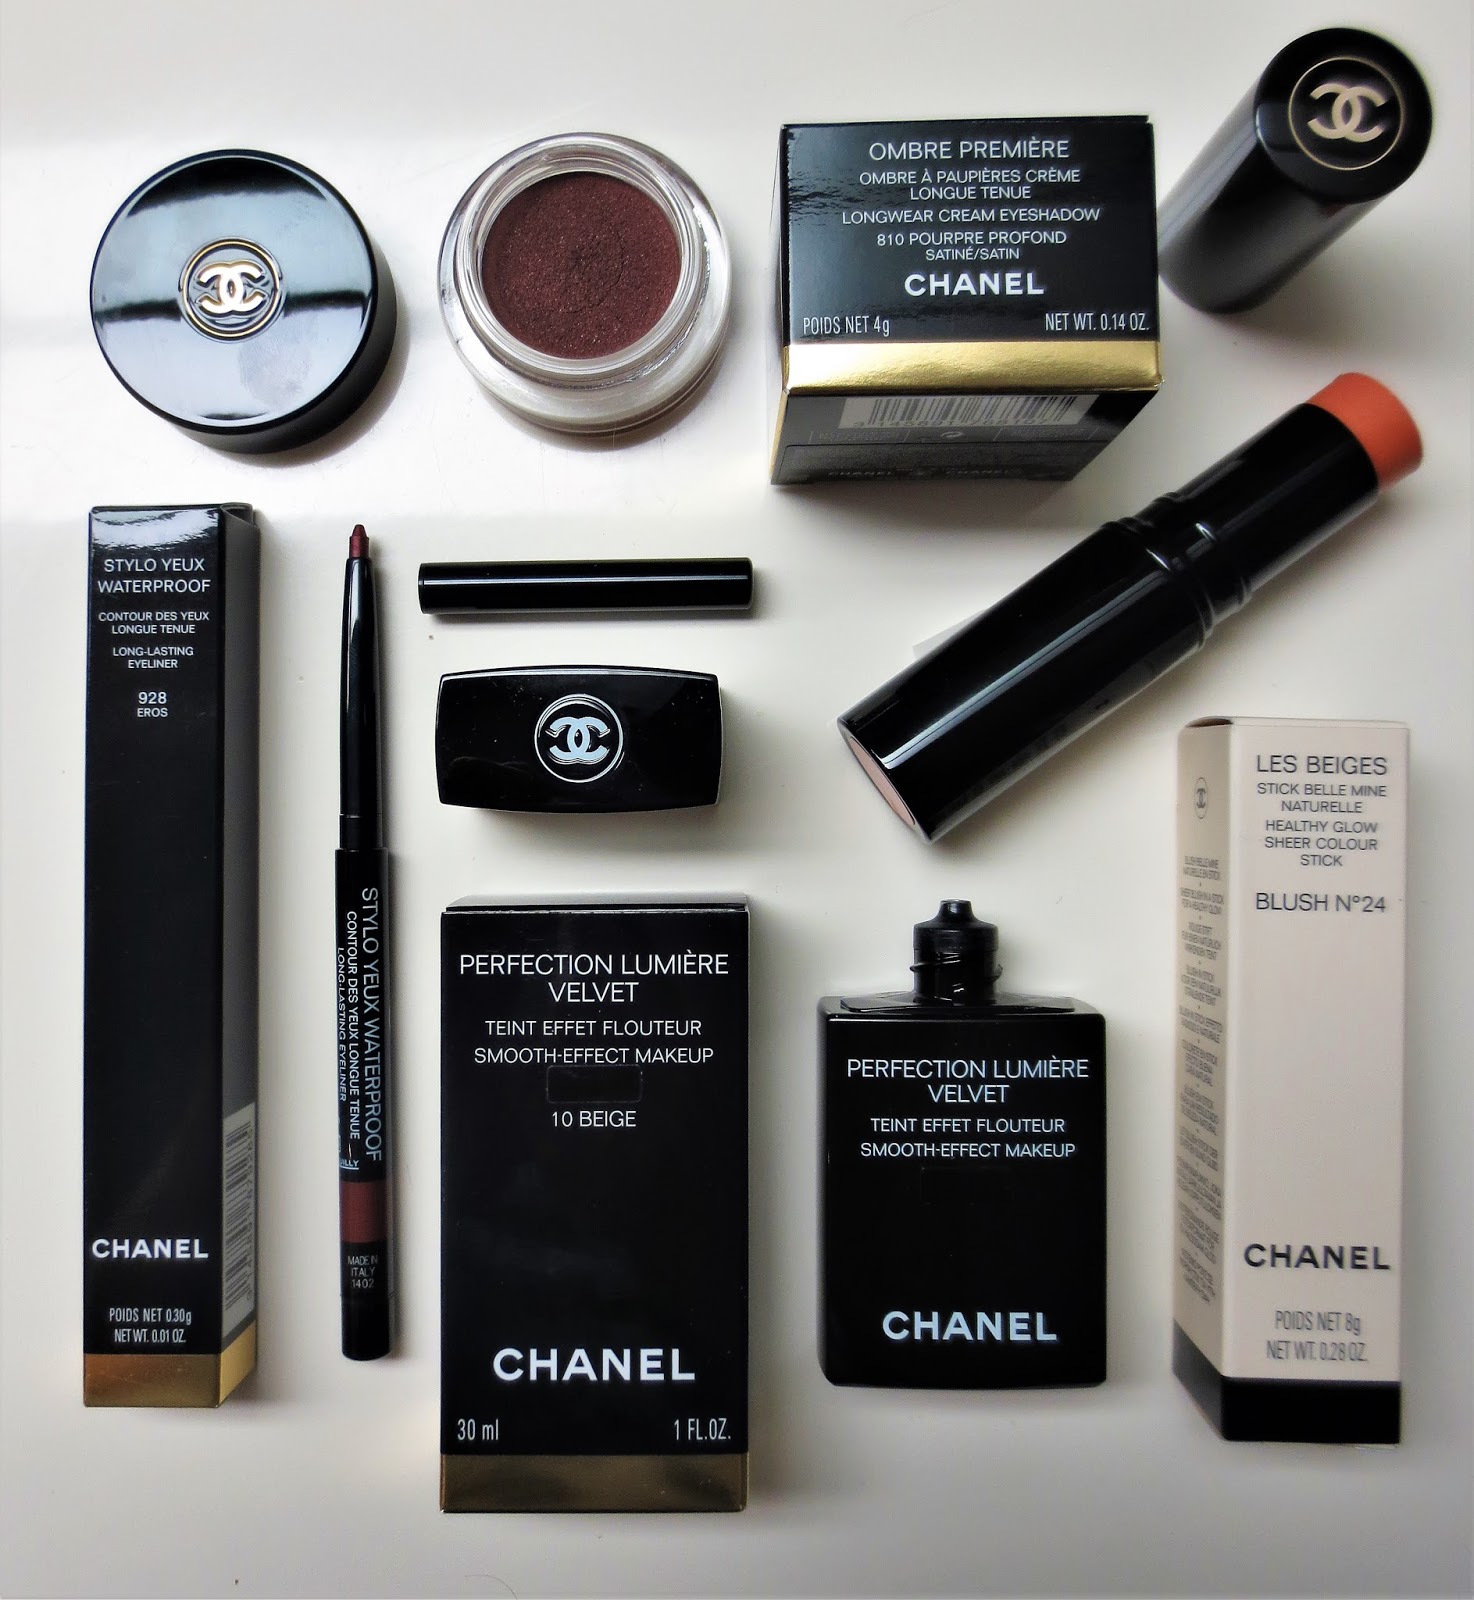 Chanel Stylo Yeux waterproof Long-Lasting Eyeliner, Beauty